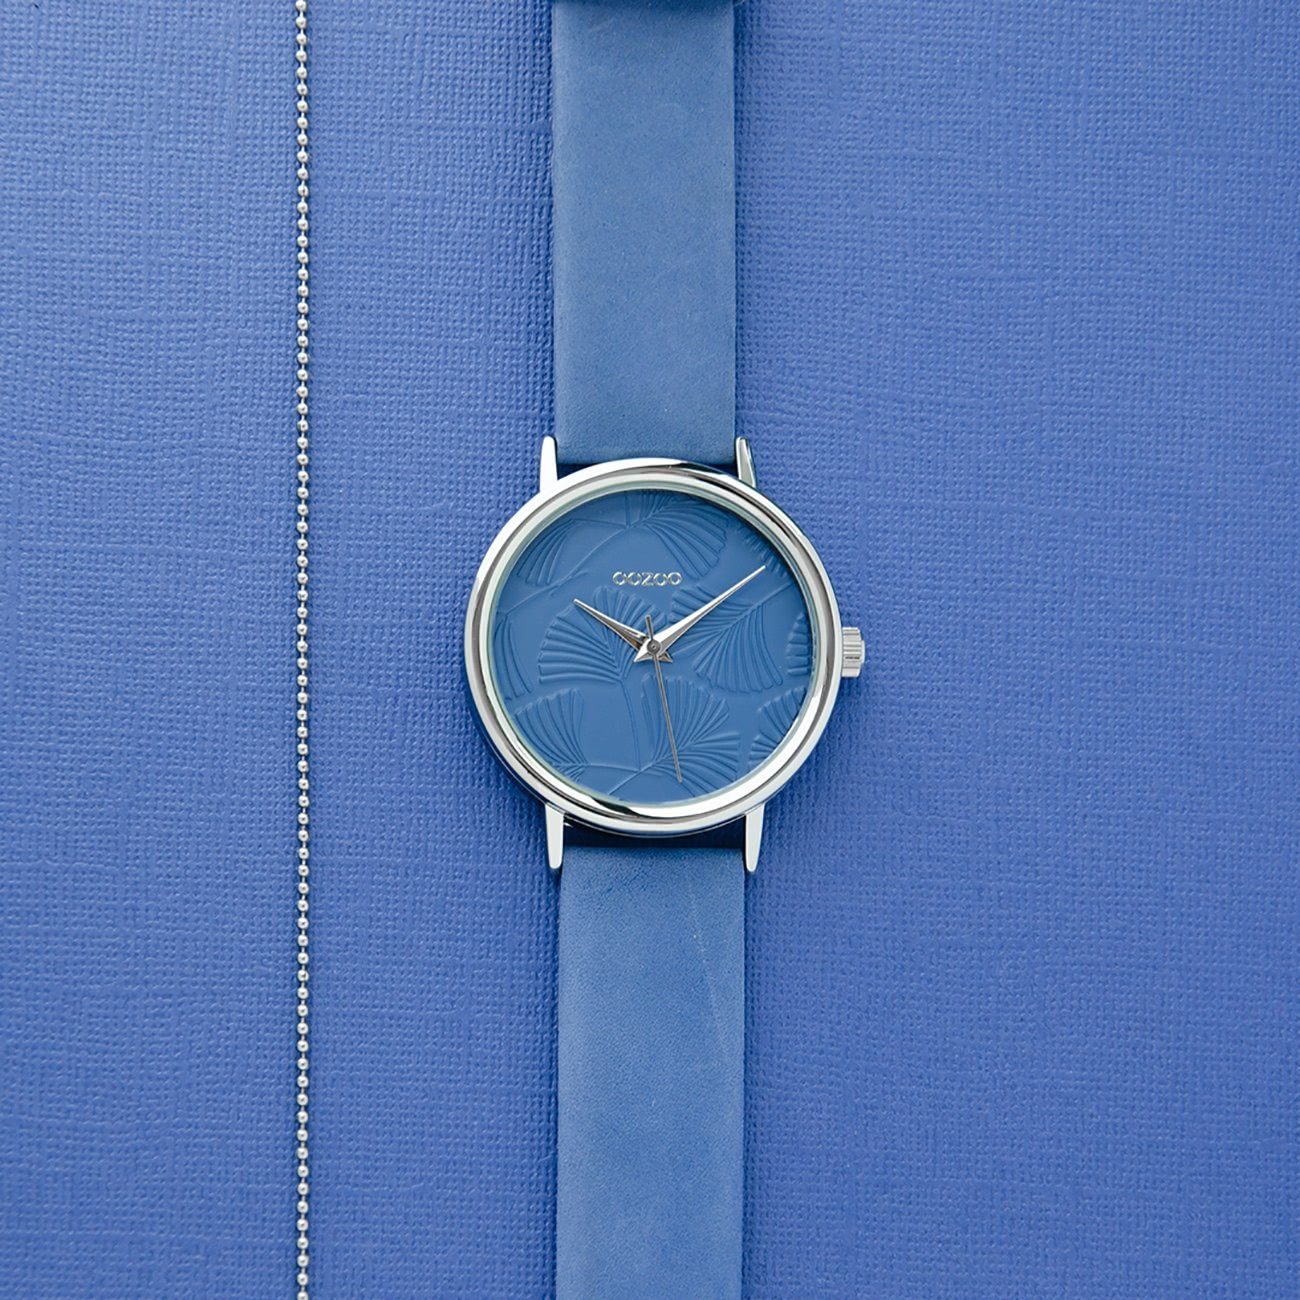 rund, Oozoo 42mm), Fashion OOZOO Quarzuhr Lederarmband Armbanduhr Damenuhr (ca. OOZOO Damen Timepieces, groß blau,